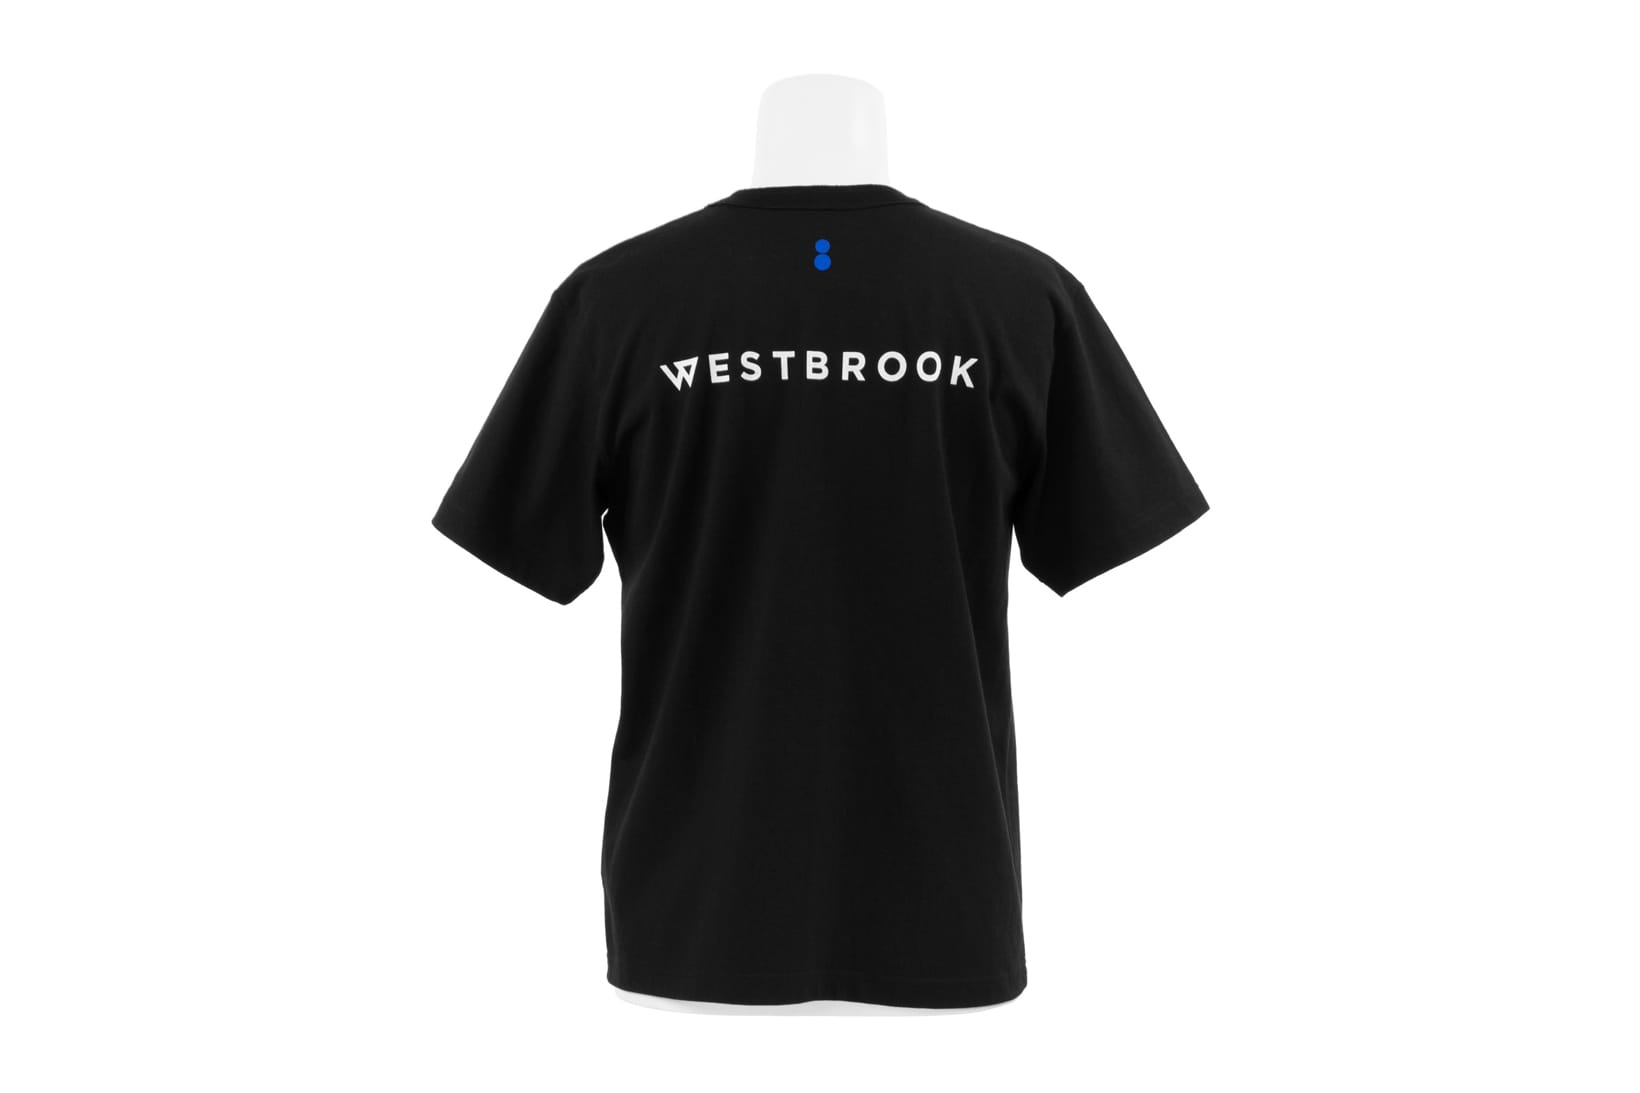 westbrook jersey 2017